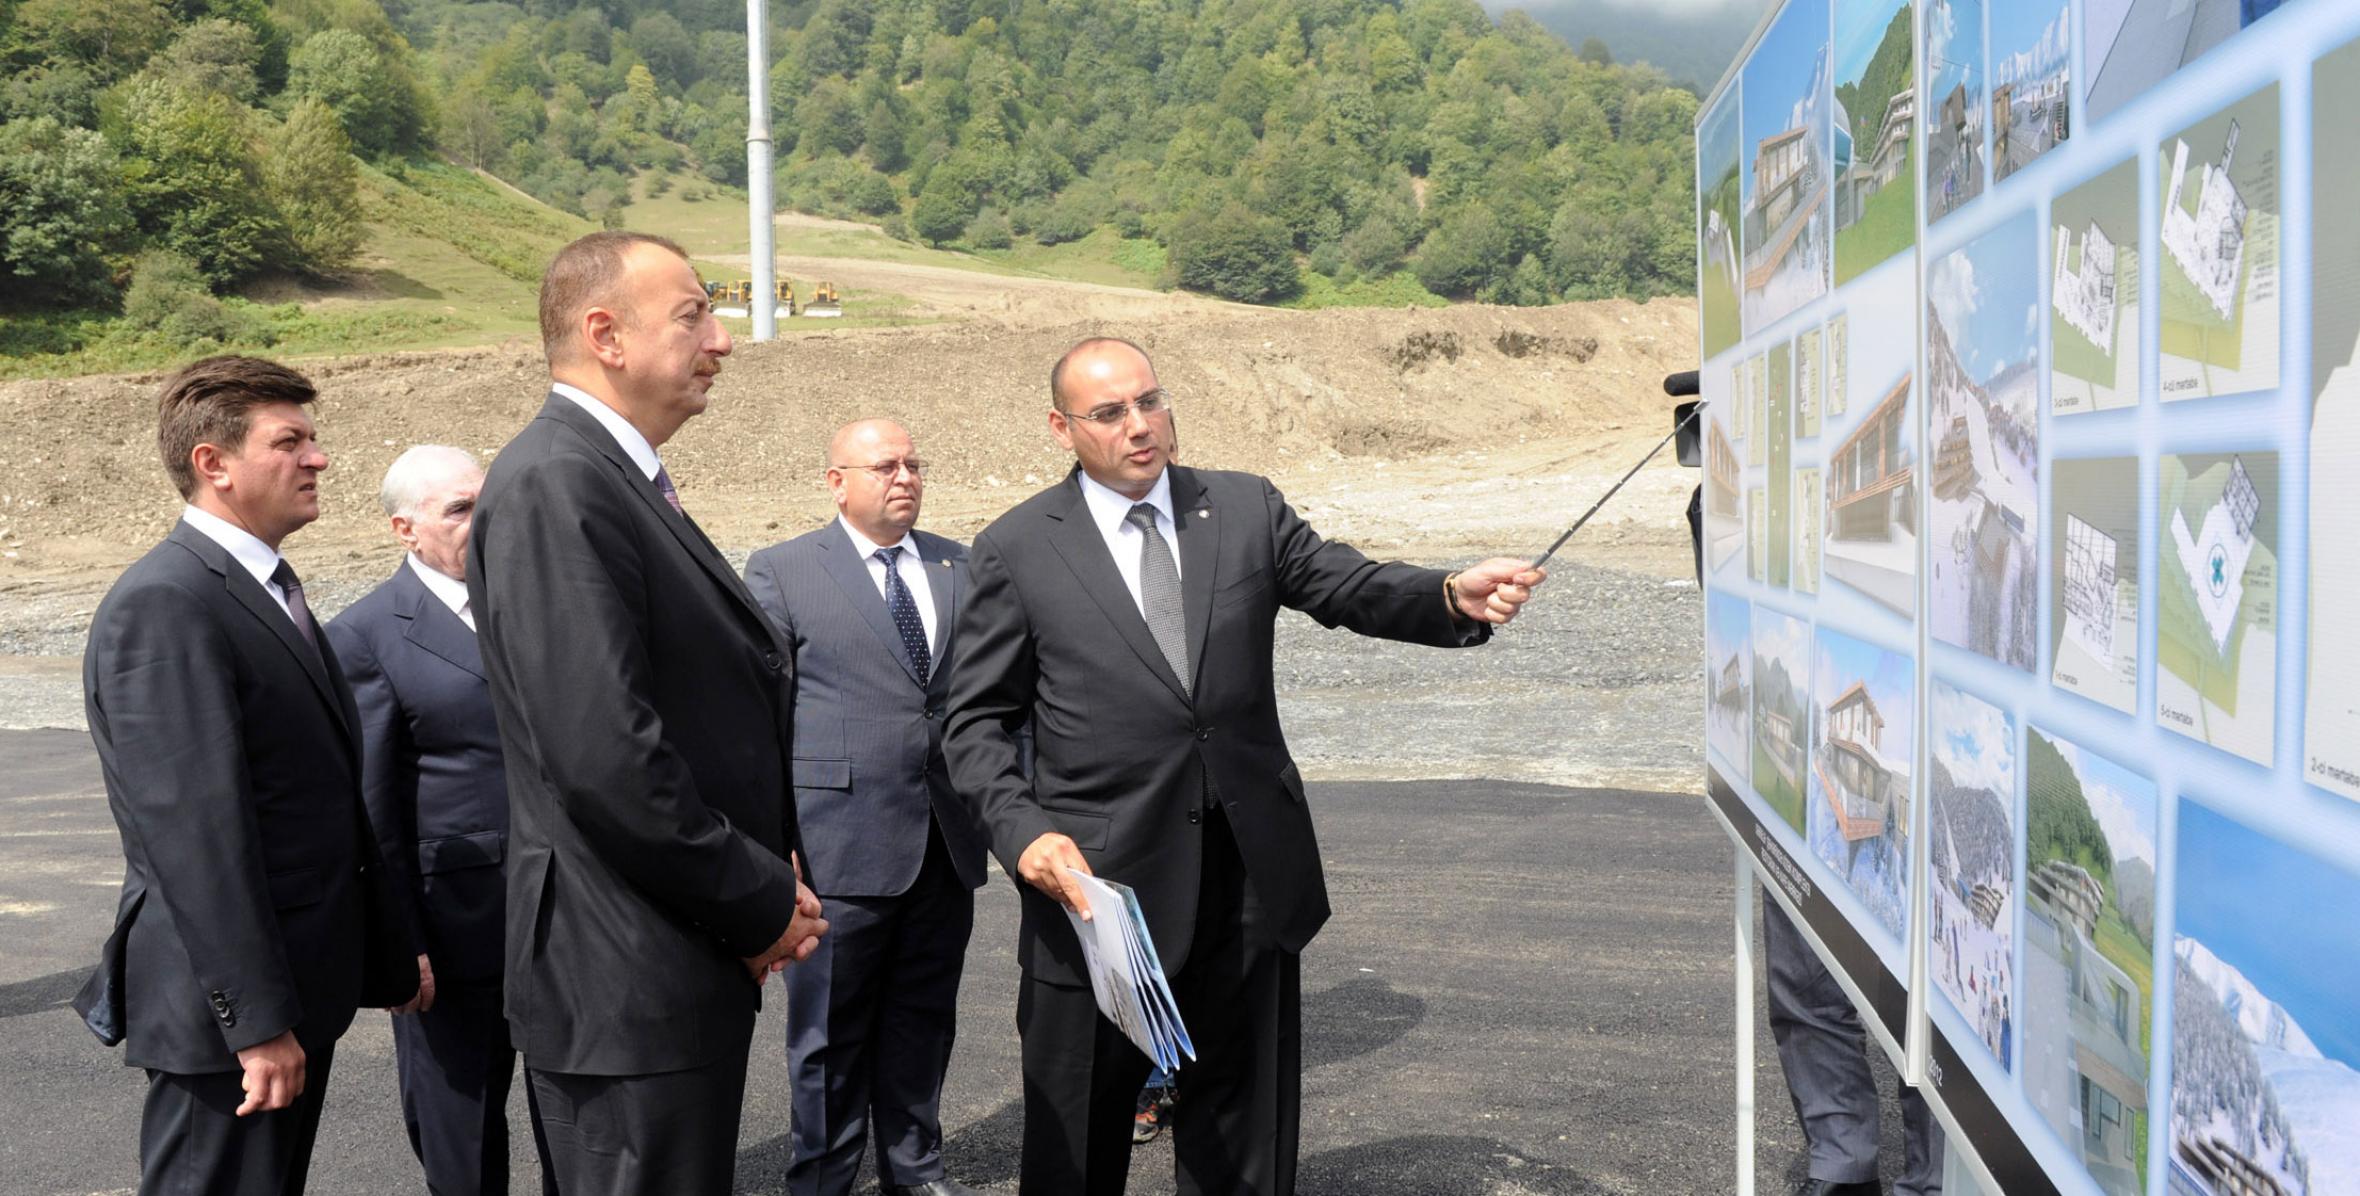 Ilham Aliyev reviewed progress of construction of the “Tufan” summer and winter ski resort in Gabala